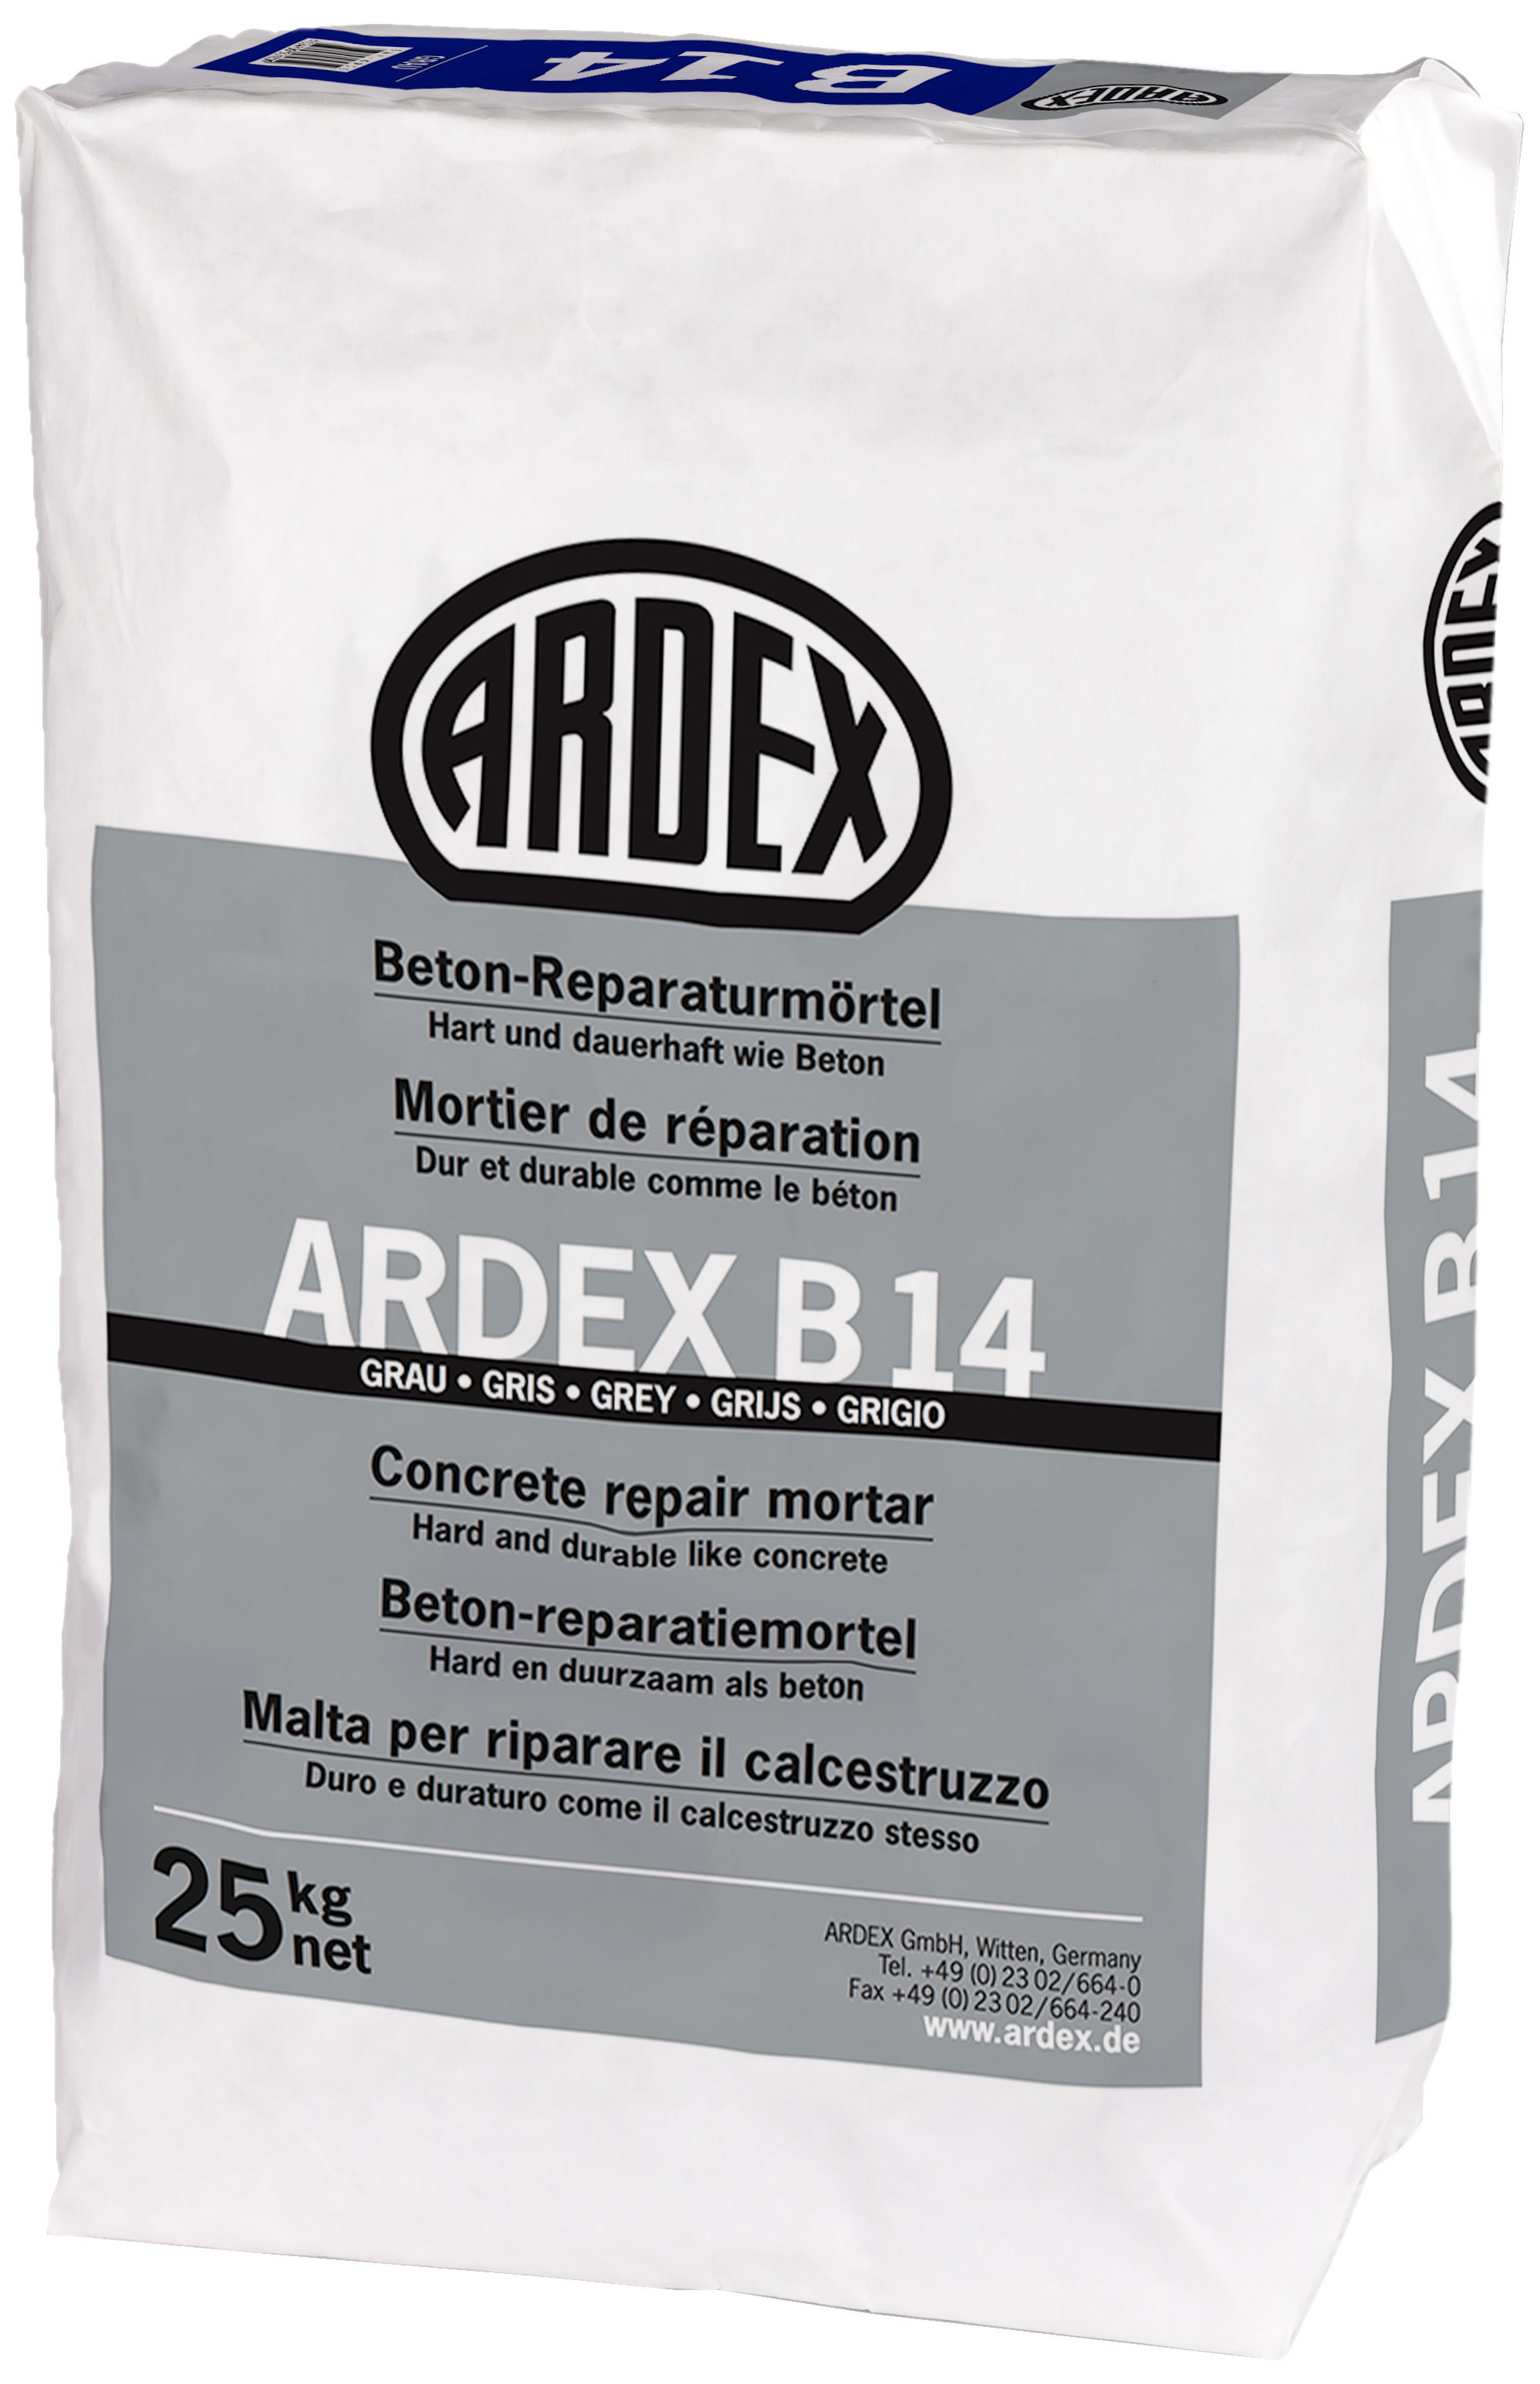 ARDEX B14 Betonprodukte Reparaturmörtel